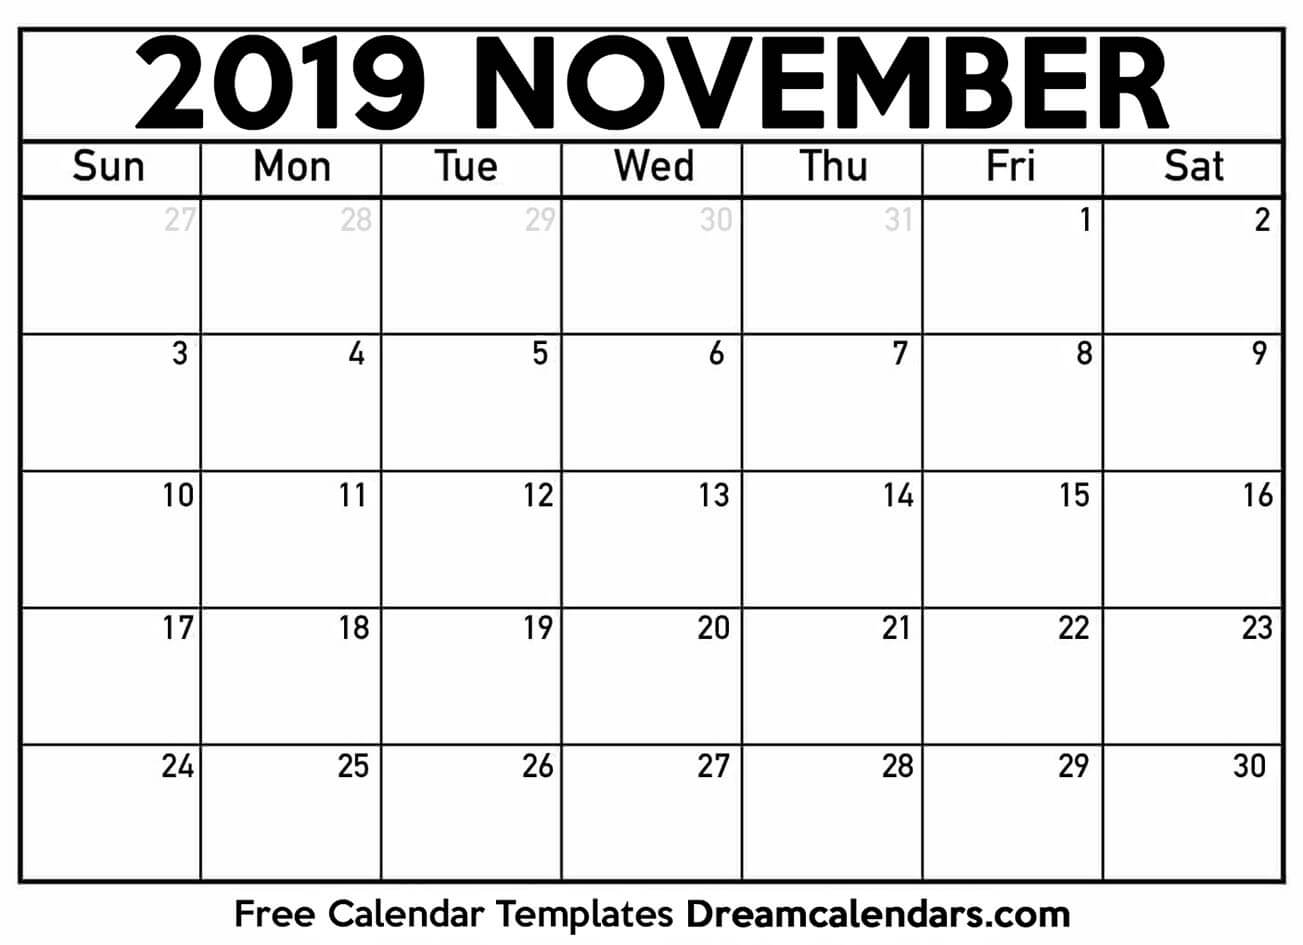 November 2019 Calendars Printable Calendar 2019 November 2019 